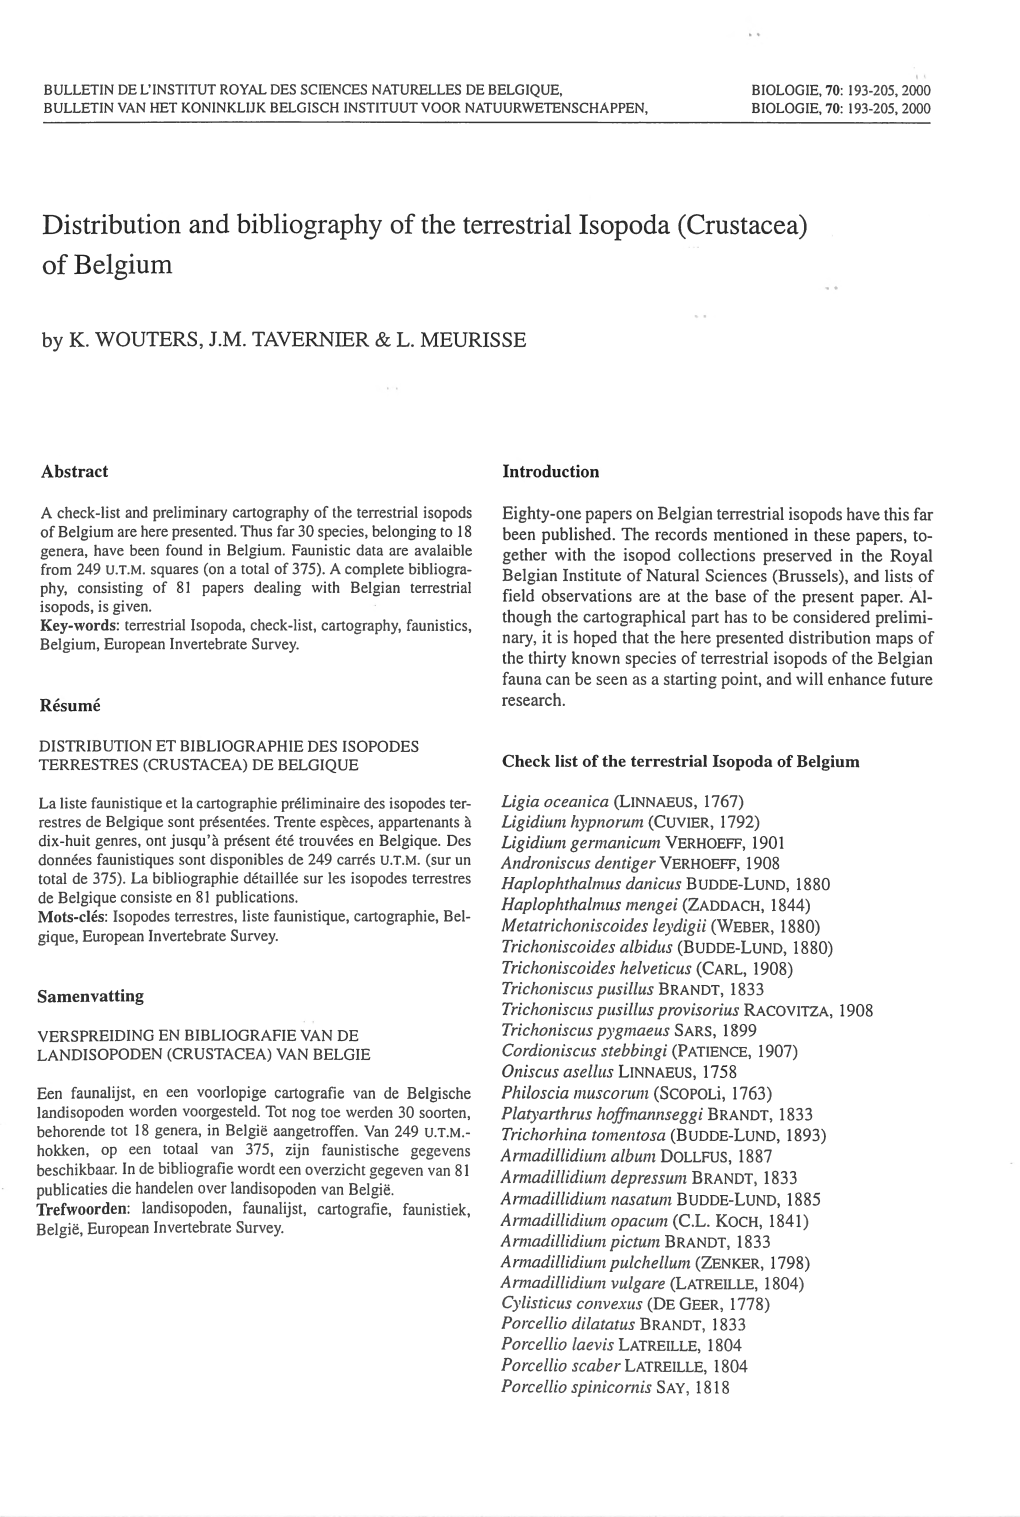 Distribution and Bibliography of the Terrestrial Isopoda (Crustacea) of Belgium